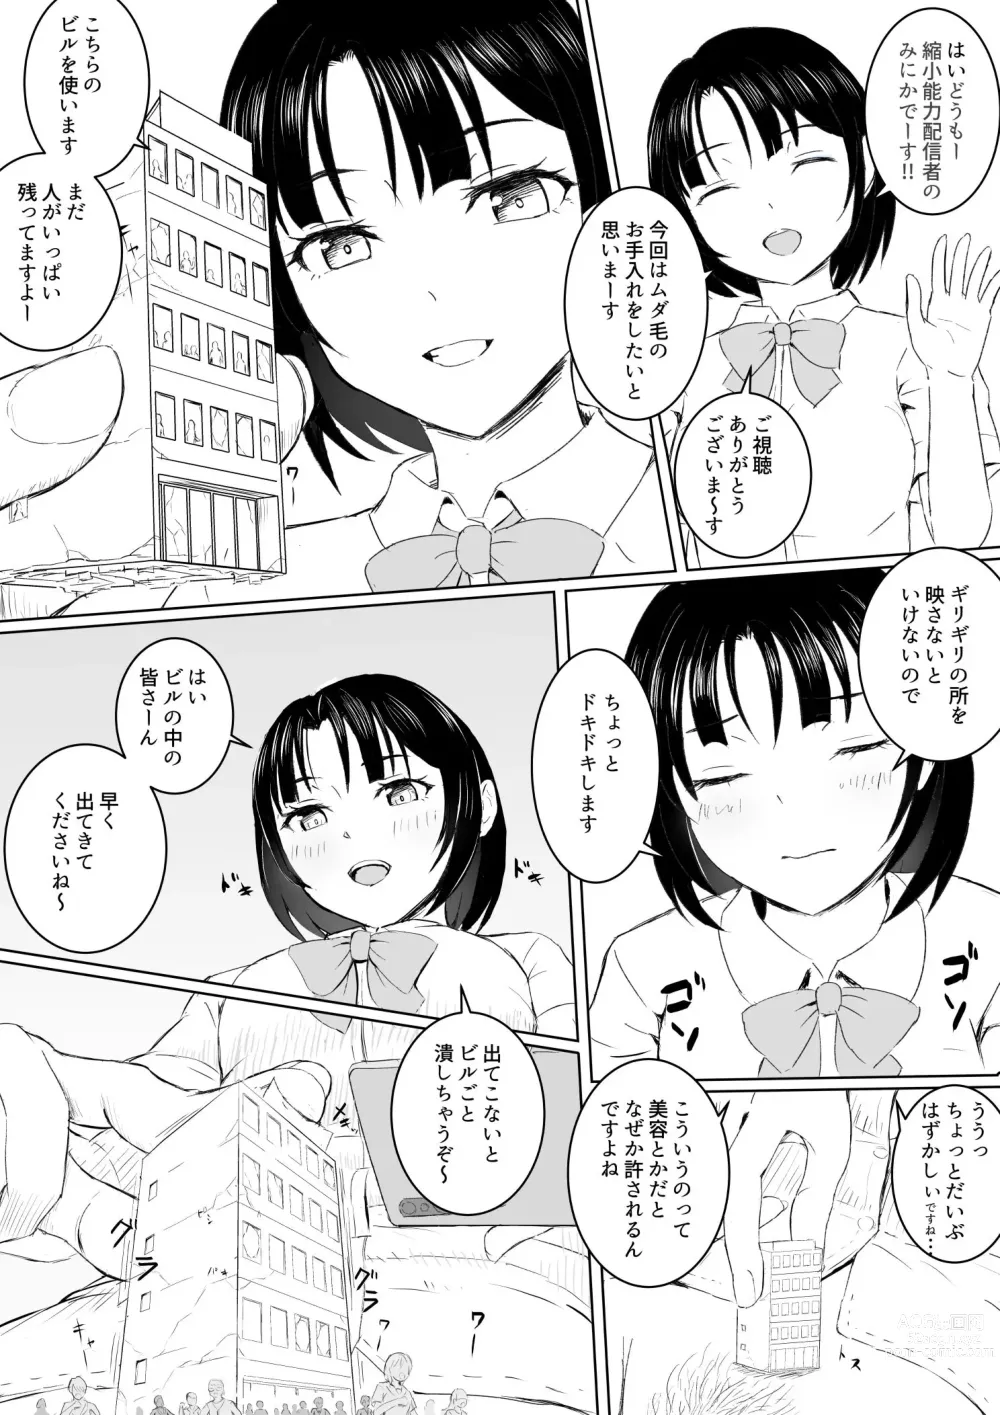 Page 2 of doujinshi Shukusho Haishin